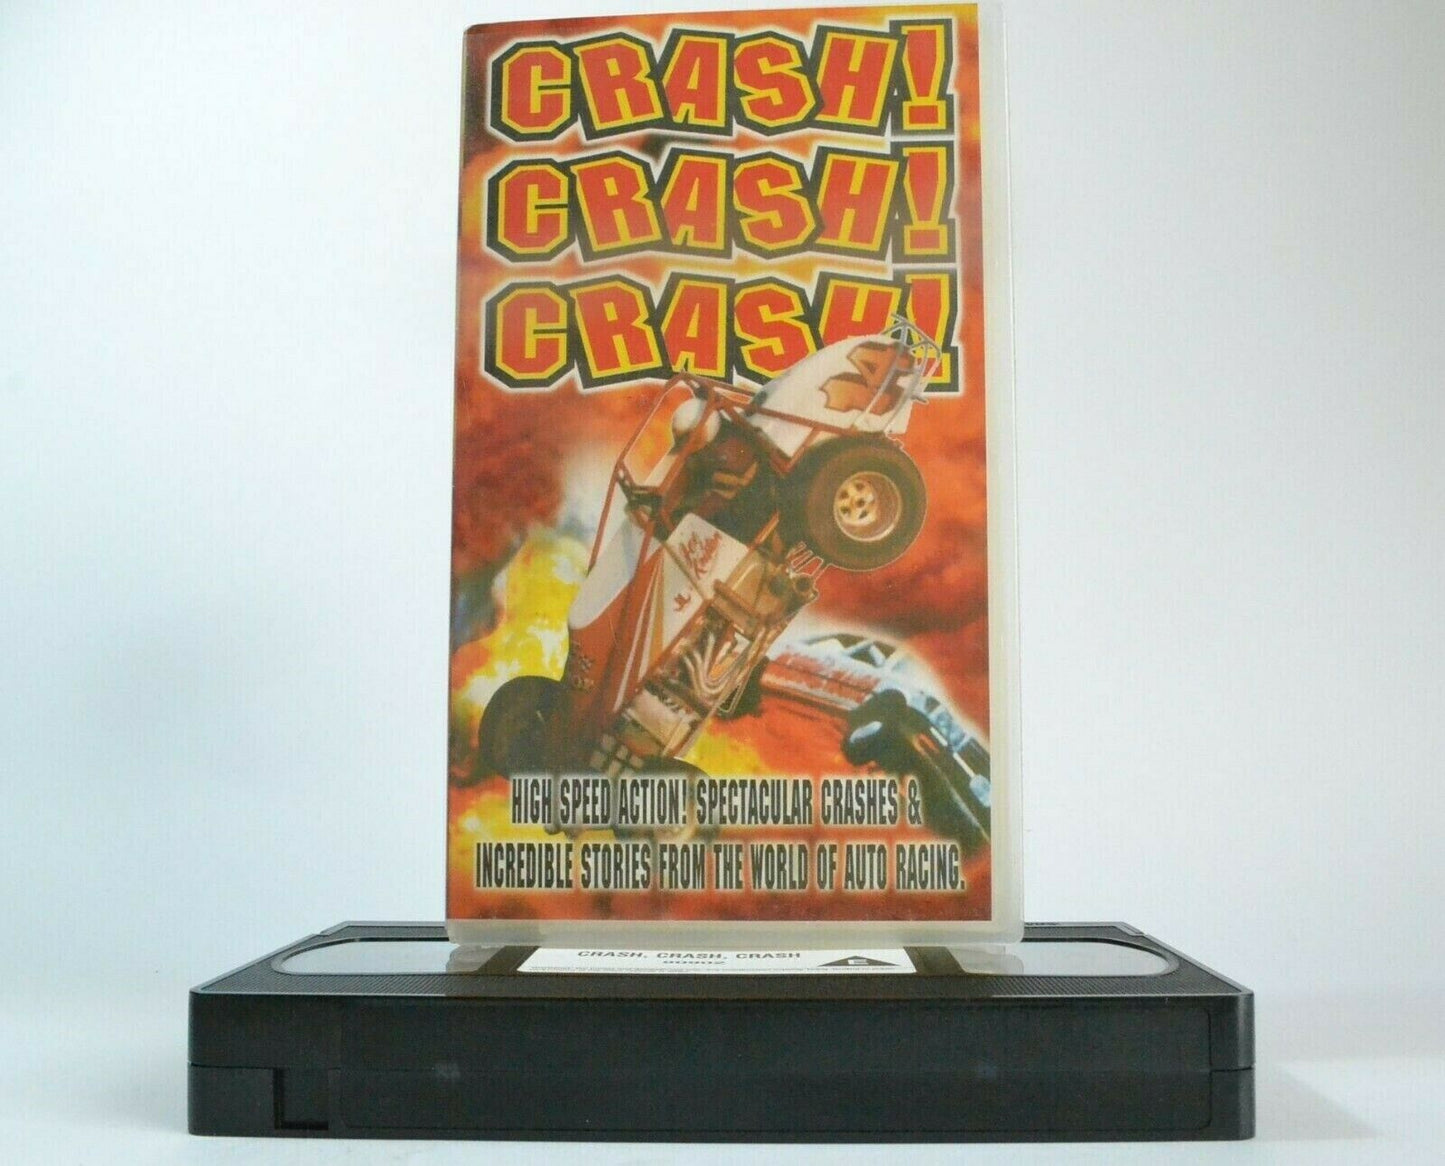 Crash, Crash, Crash: Motorsports - Car Racing - Sprint Cars - Dirty Tracks - VHS-